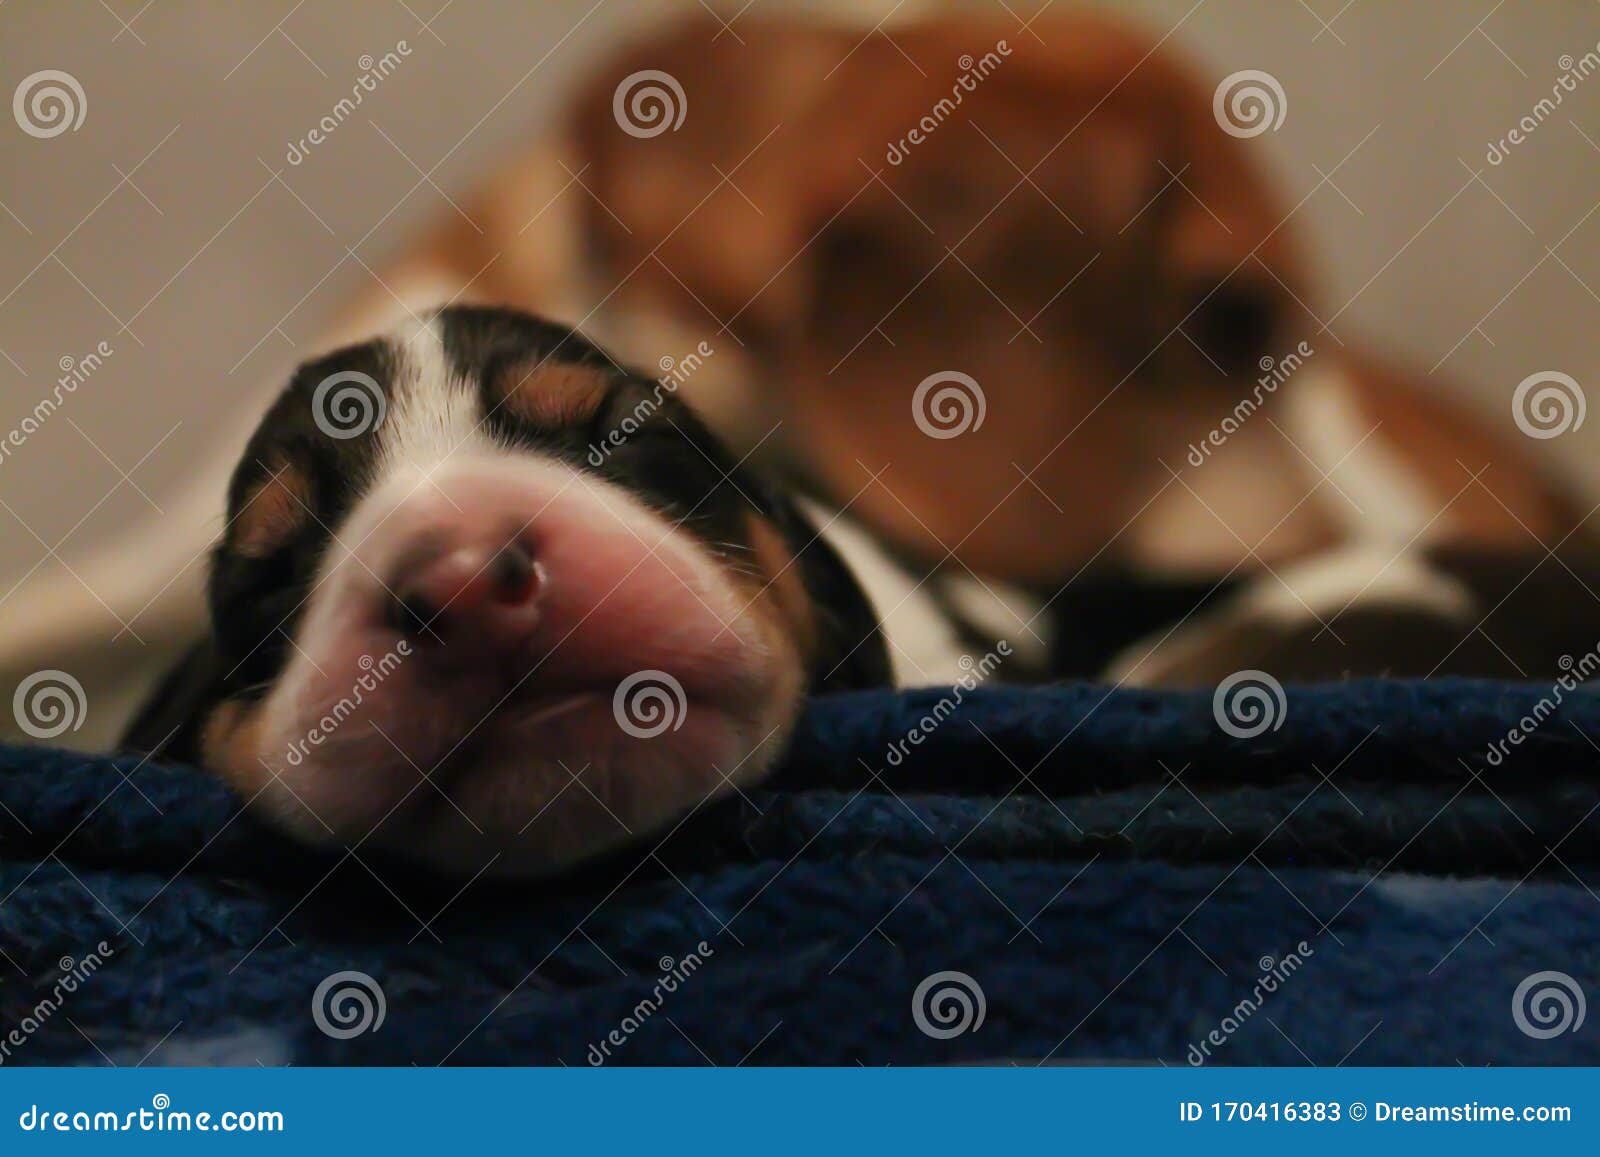 puppy beagle sleeping tight